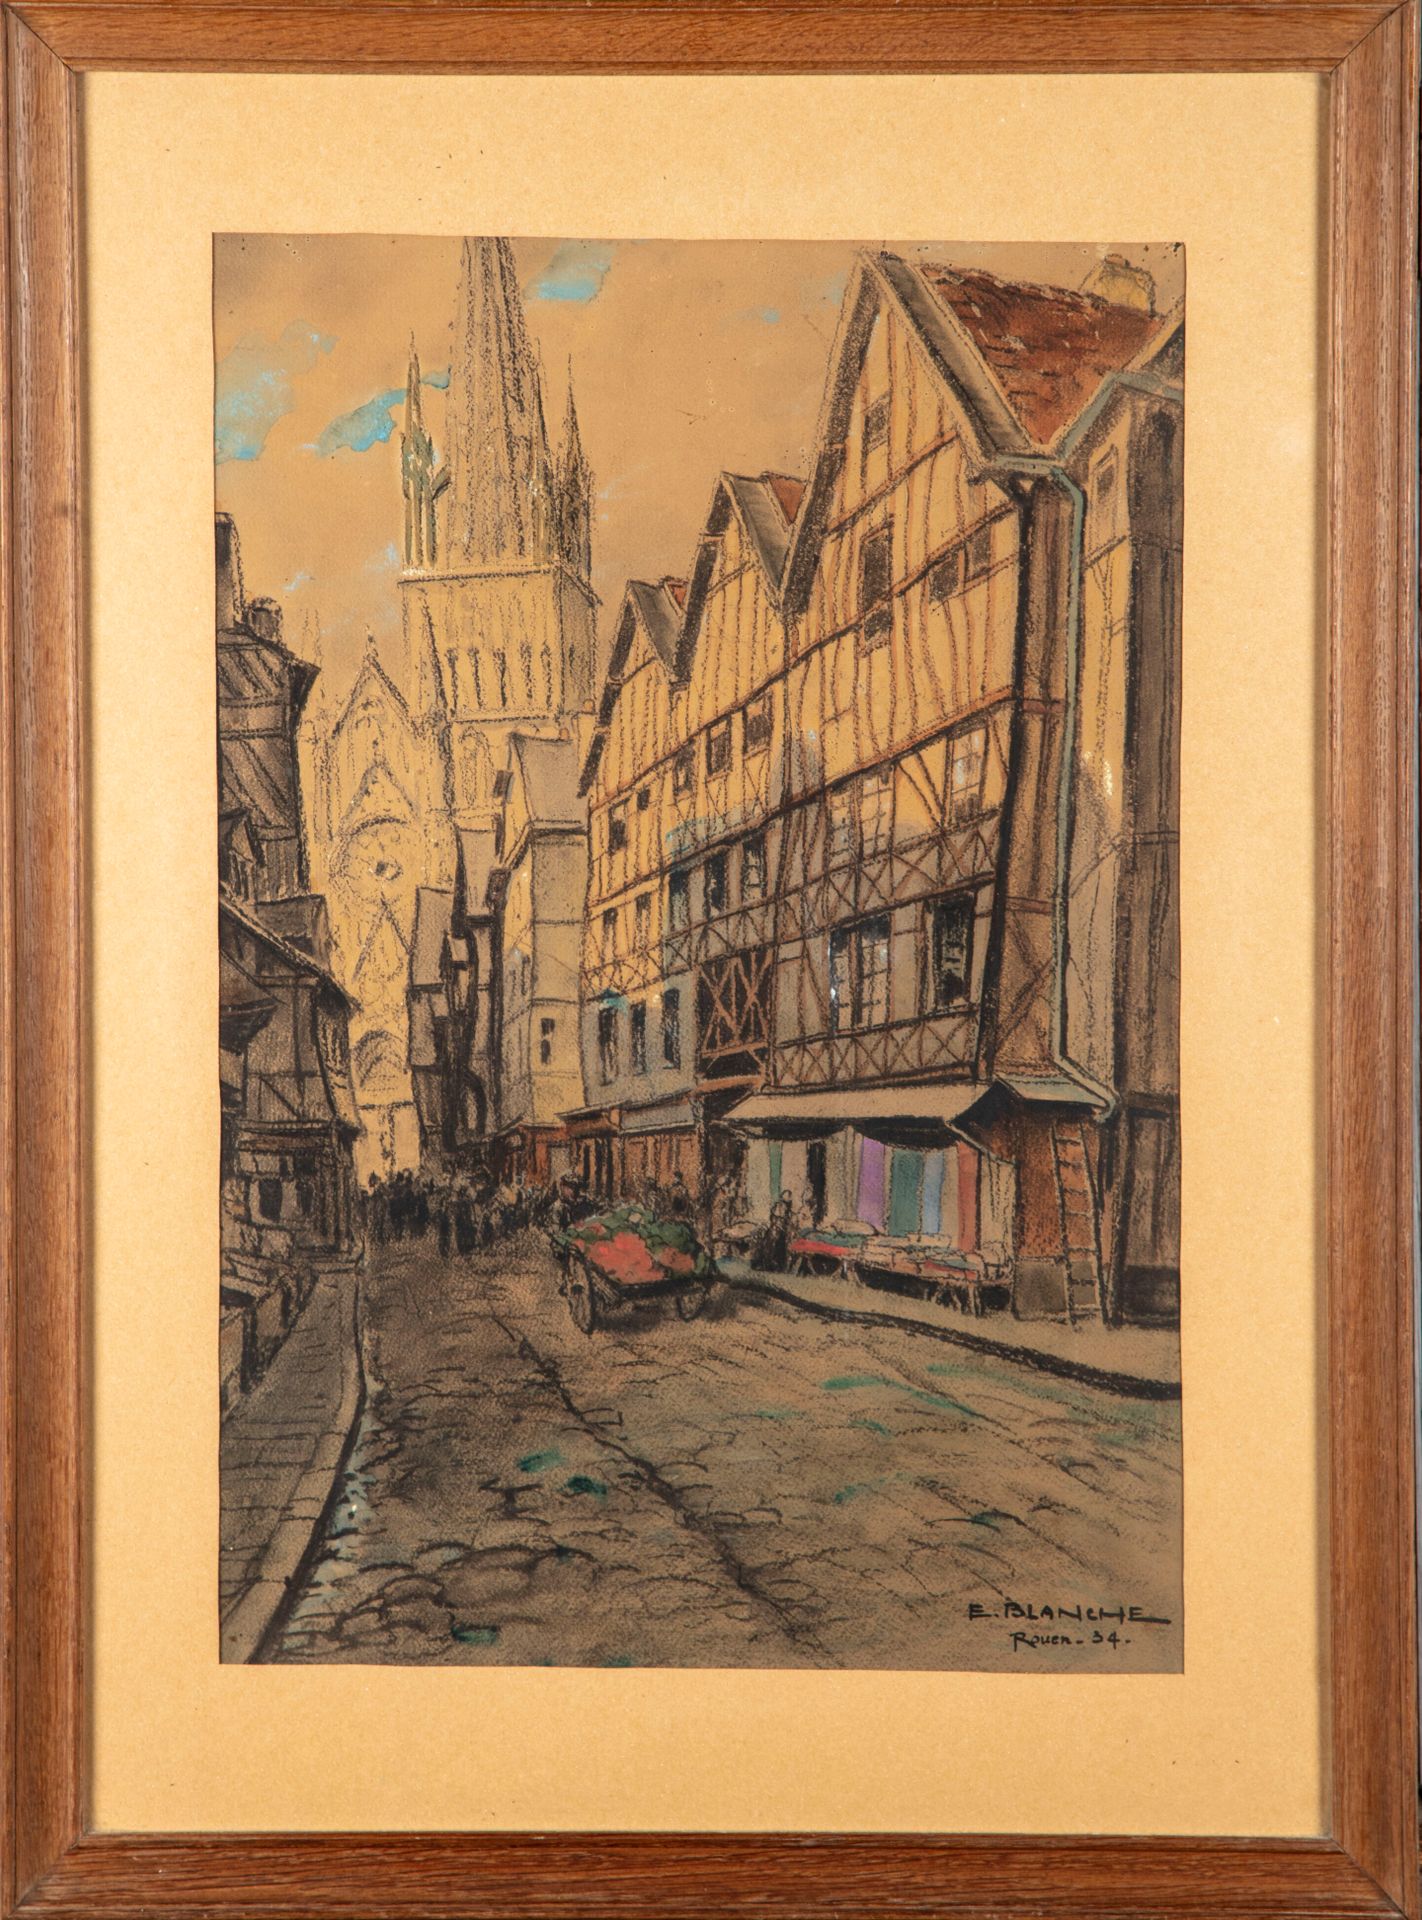 Null 埃马纽埃尔-布朗什(1880-1946)

鲁昂的Epicerie街

右下角有签名的粉彩画，日期为1934年

49 x 33 cm